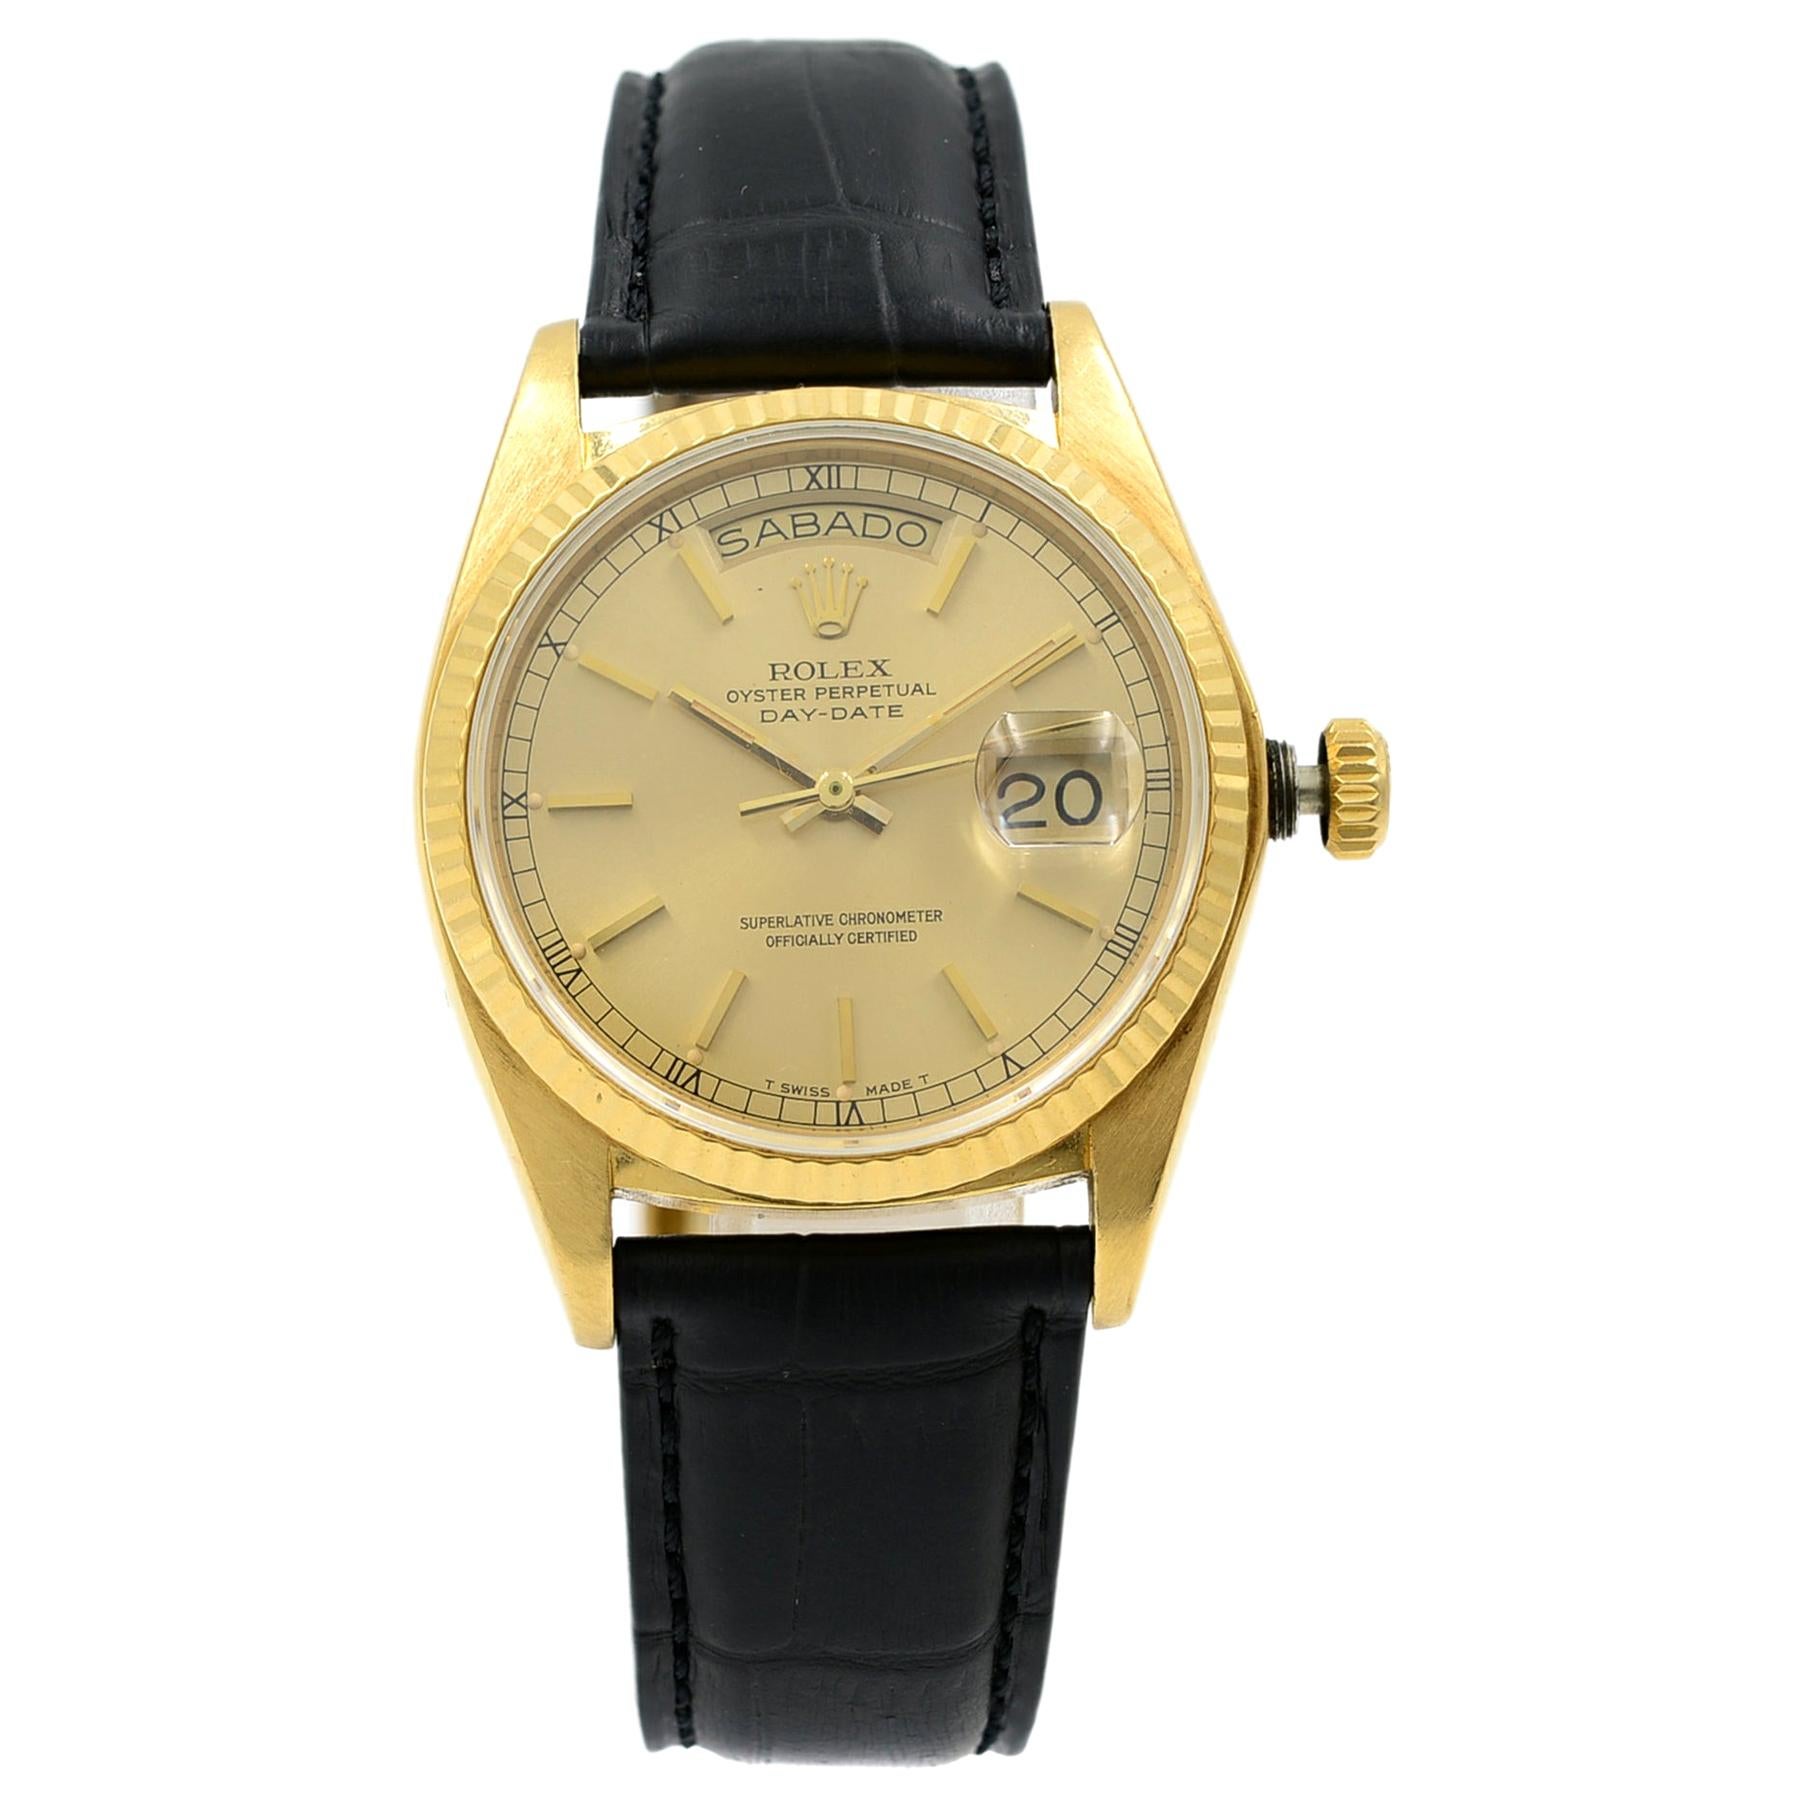 Rolex Day-Date 18 Karat Gold Champagne Spanish Calendar Automatic Watch 18038